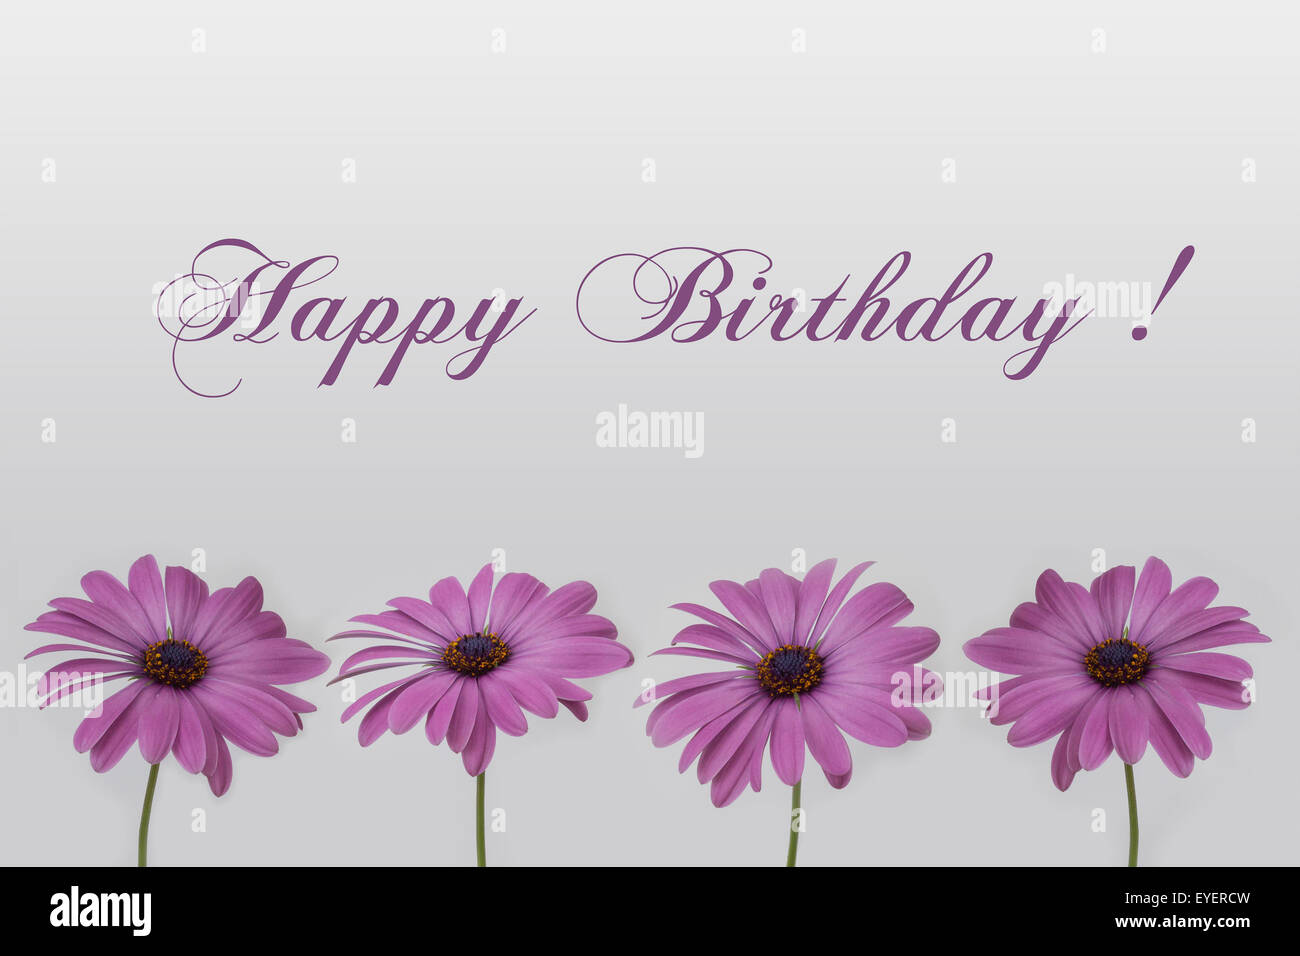 Happy Birthday flowers Stock Photo - Alamy